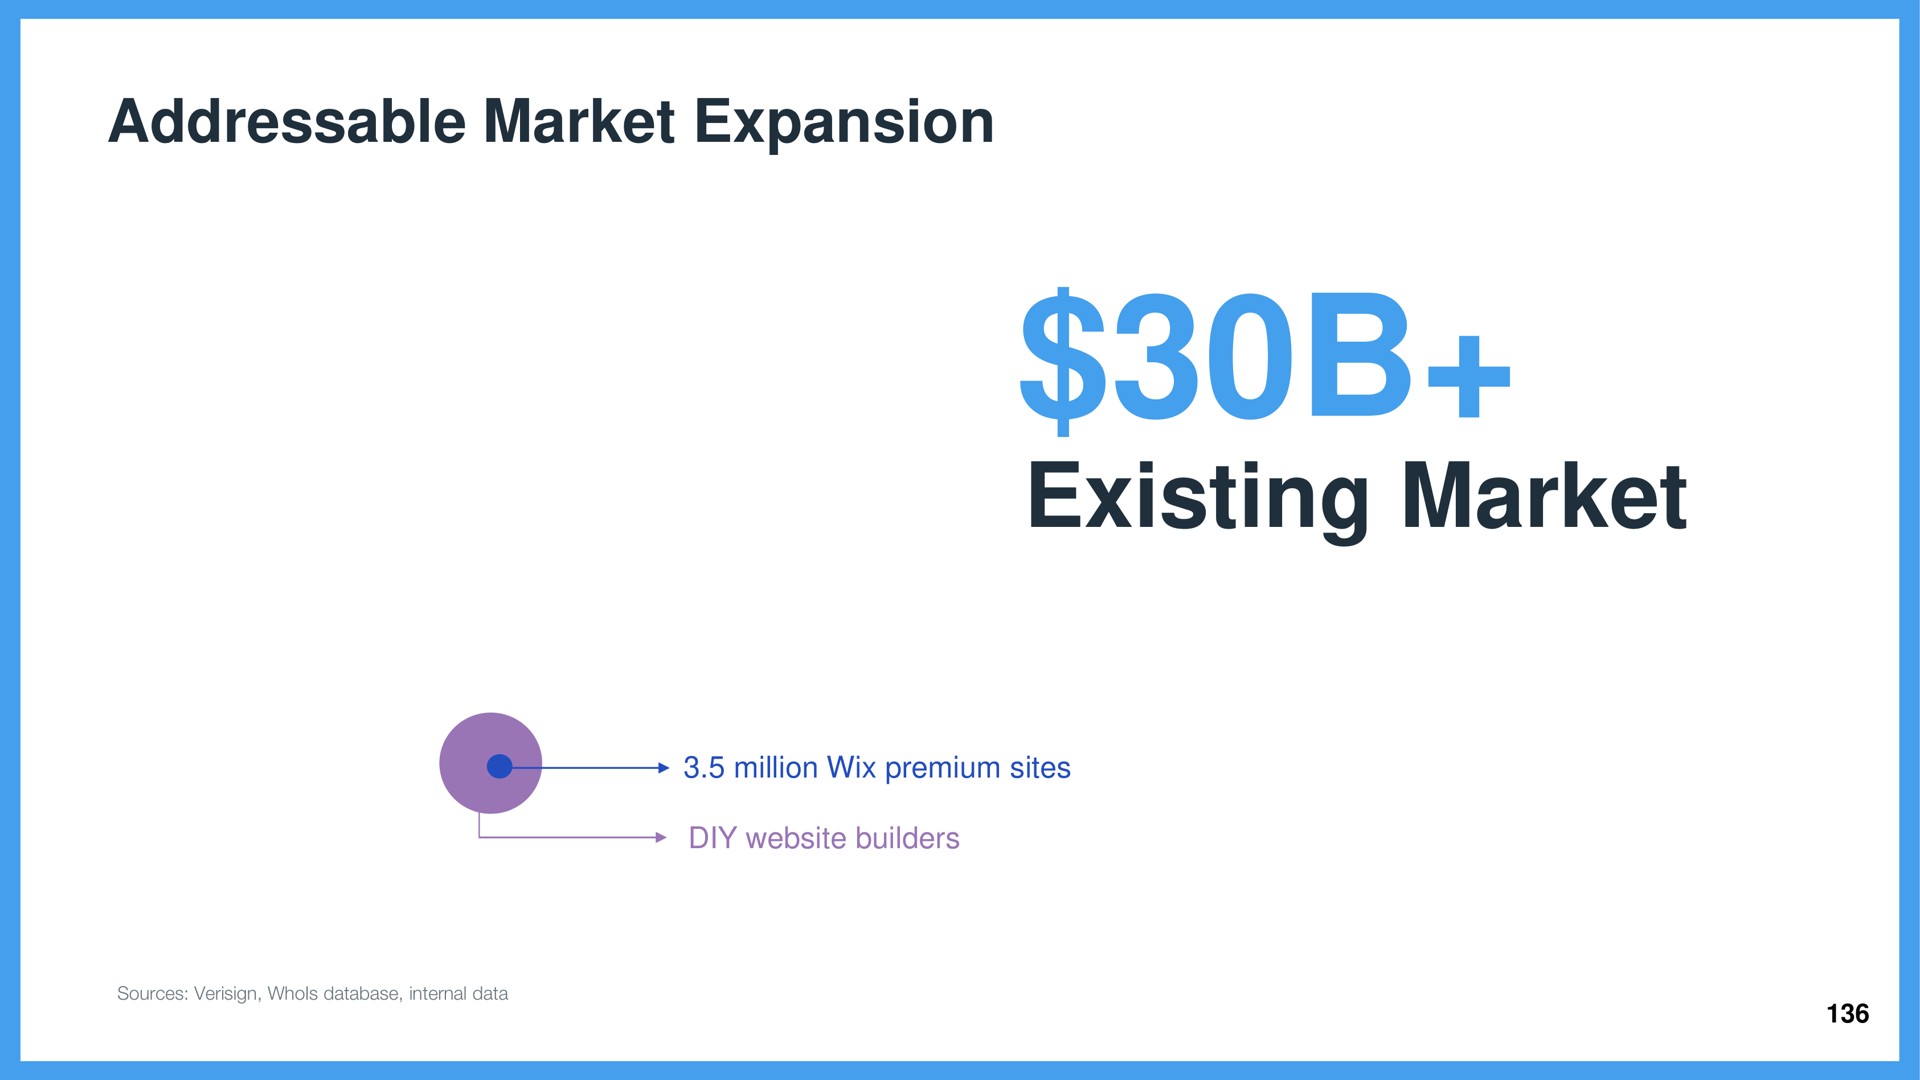 market expansion existing market | Wix